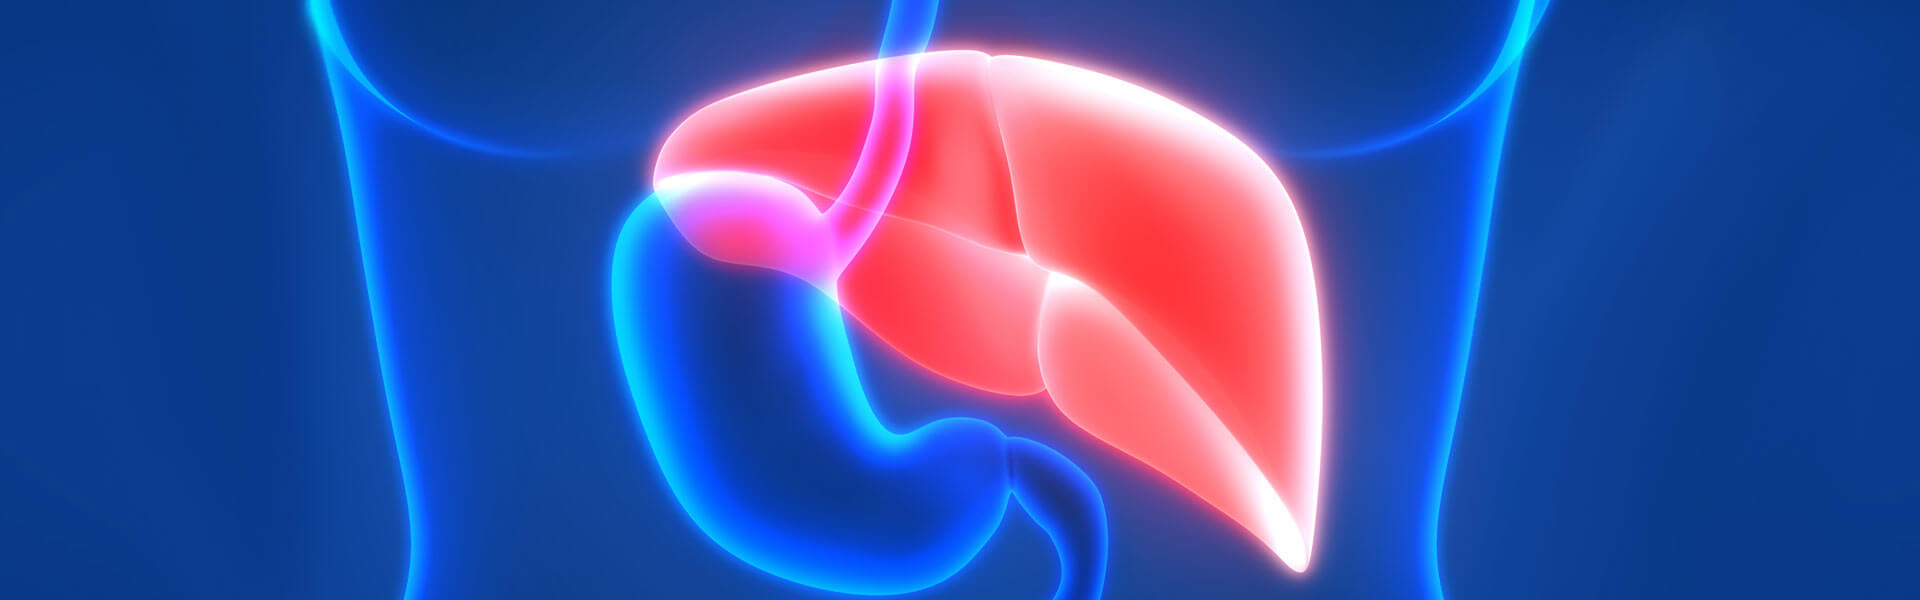 The Growing Epidemic of Non-alcoholic Steatohepatitis (NASH) Fatty Liver Disease